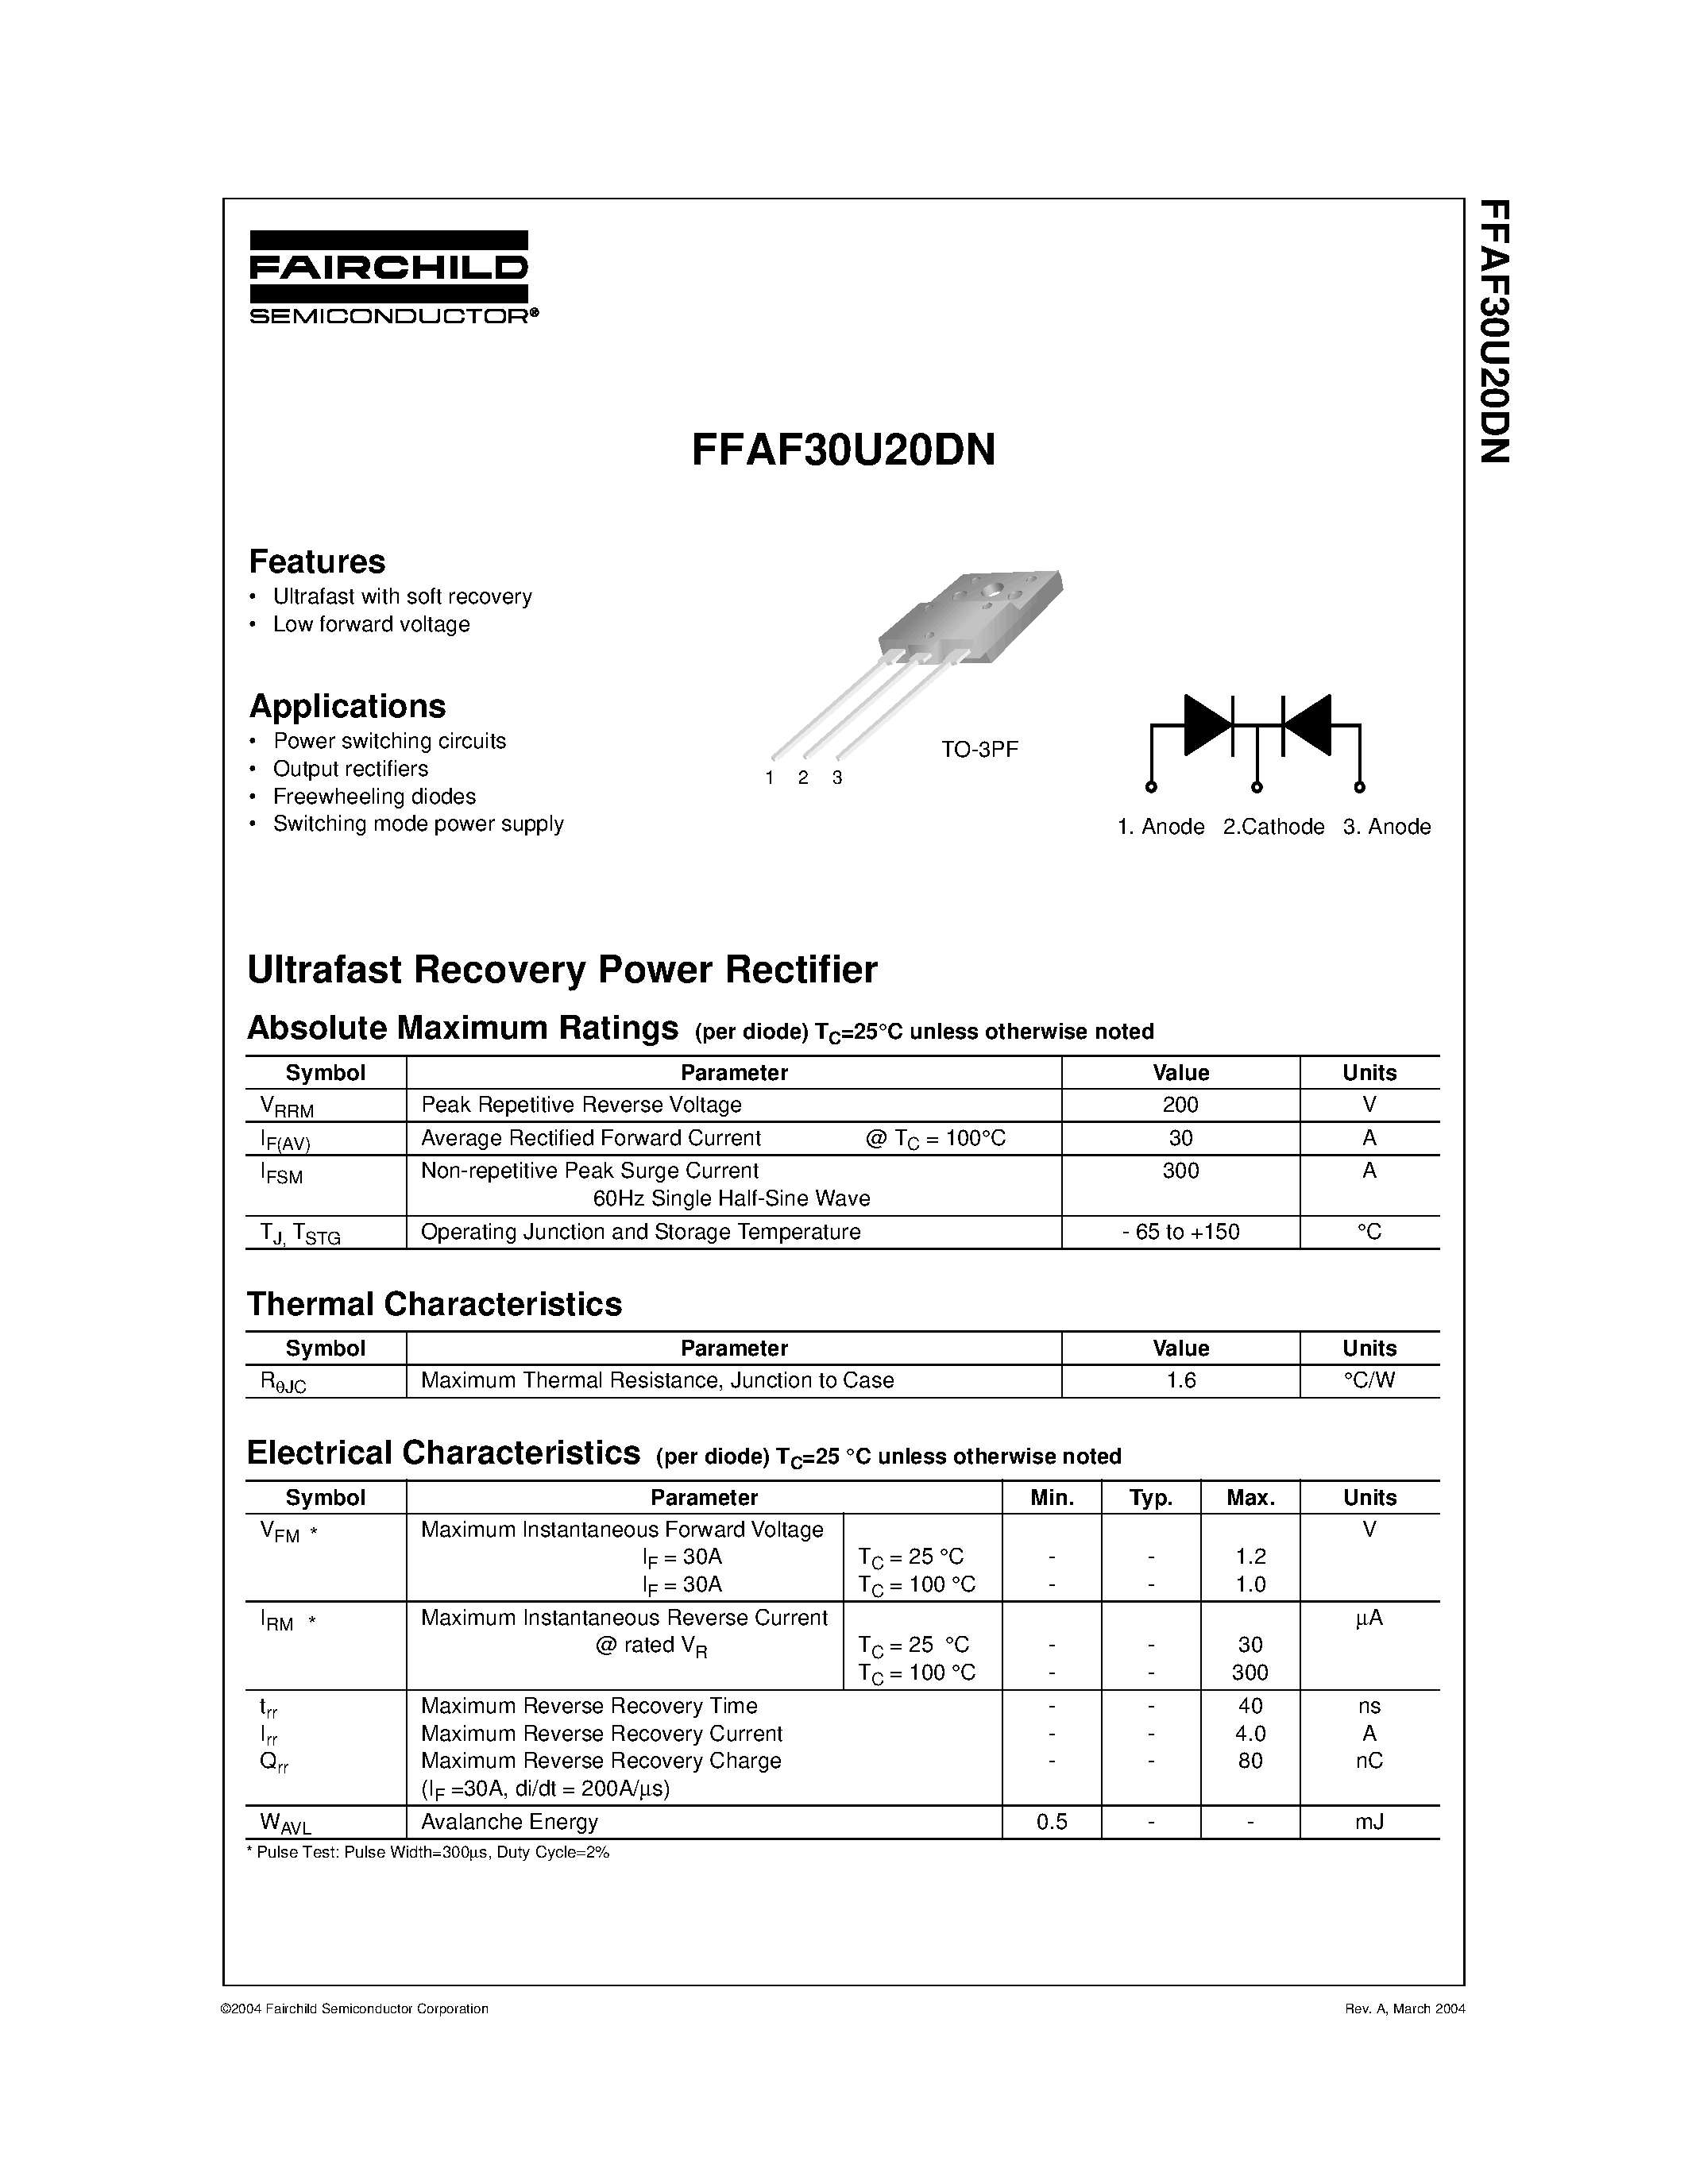 Datasheet FFAF30U20DN - Ultrafast Recovery Power Rectifier page 1